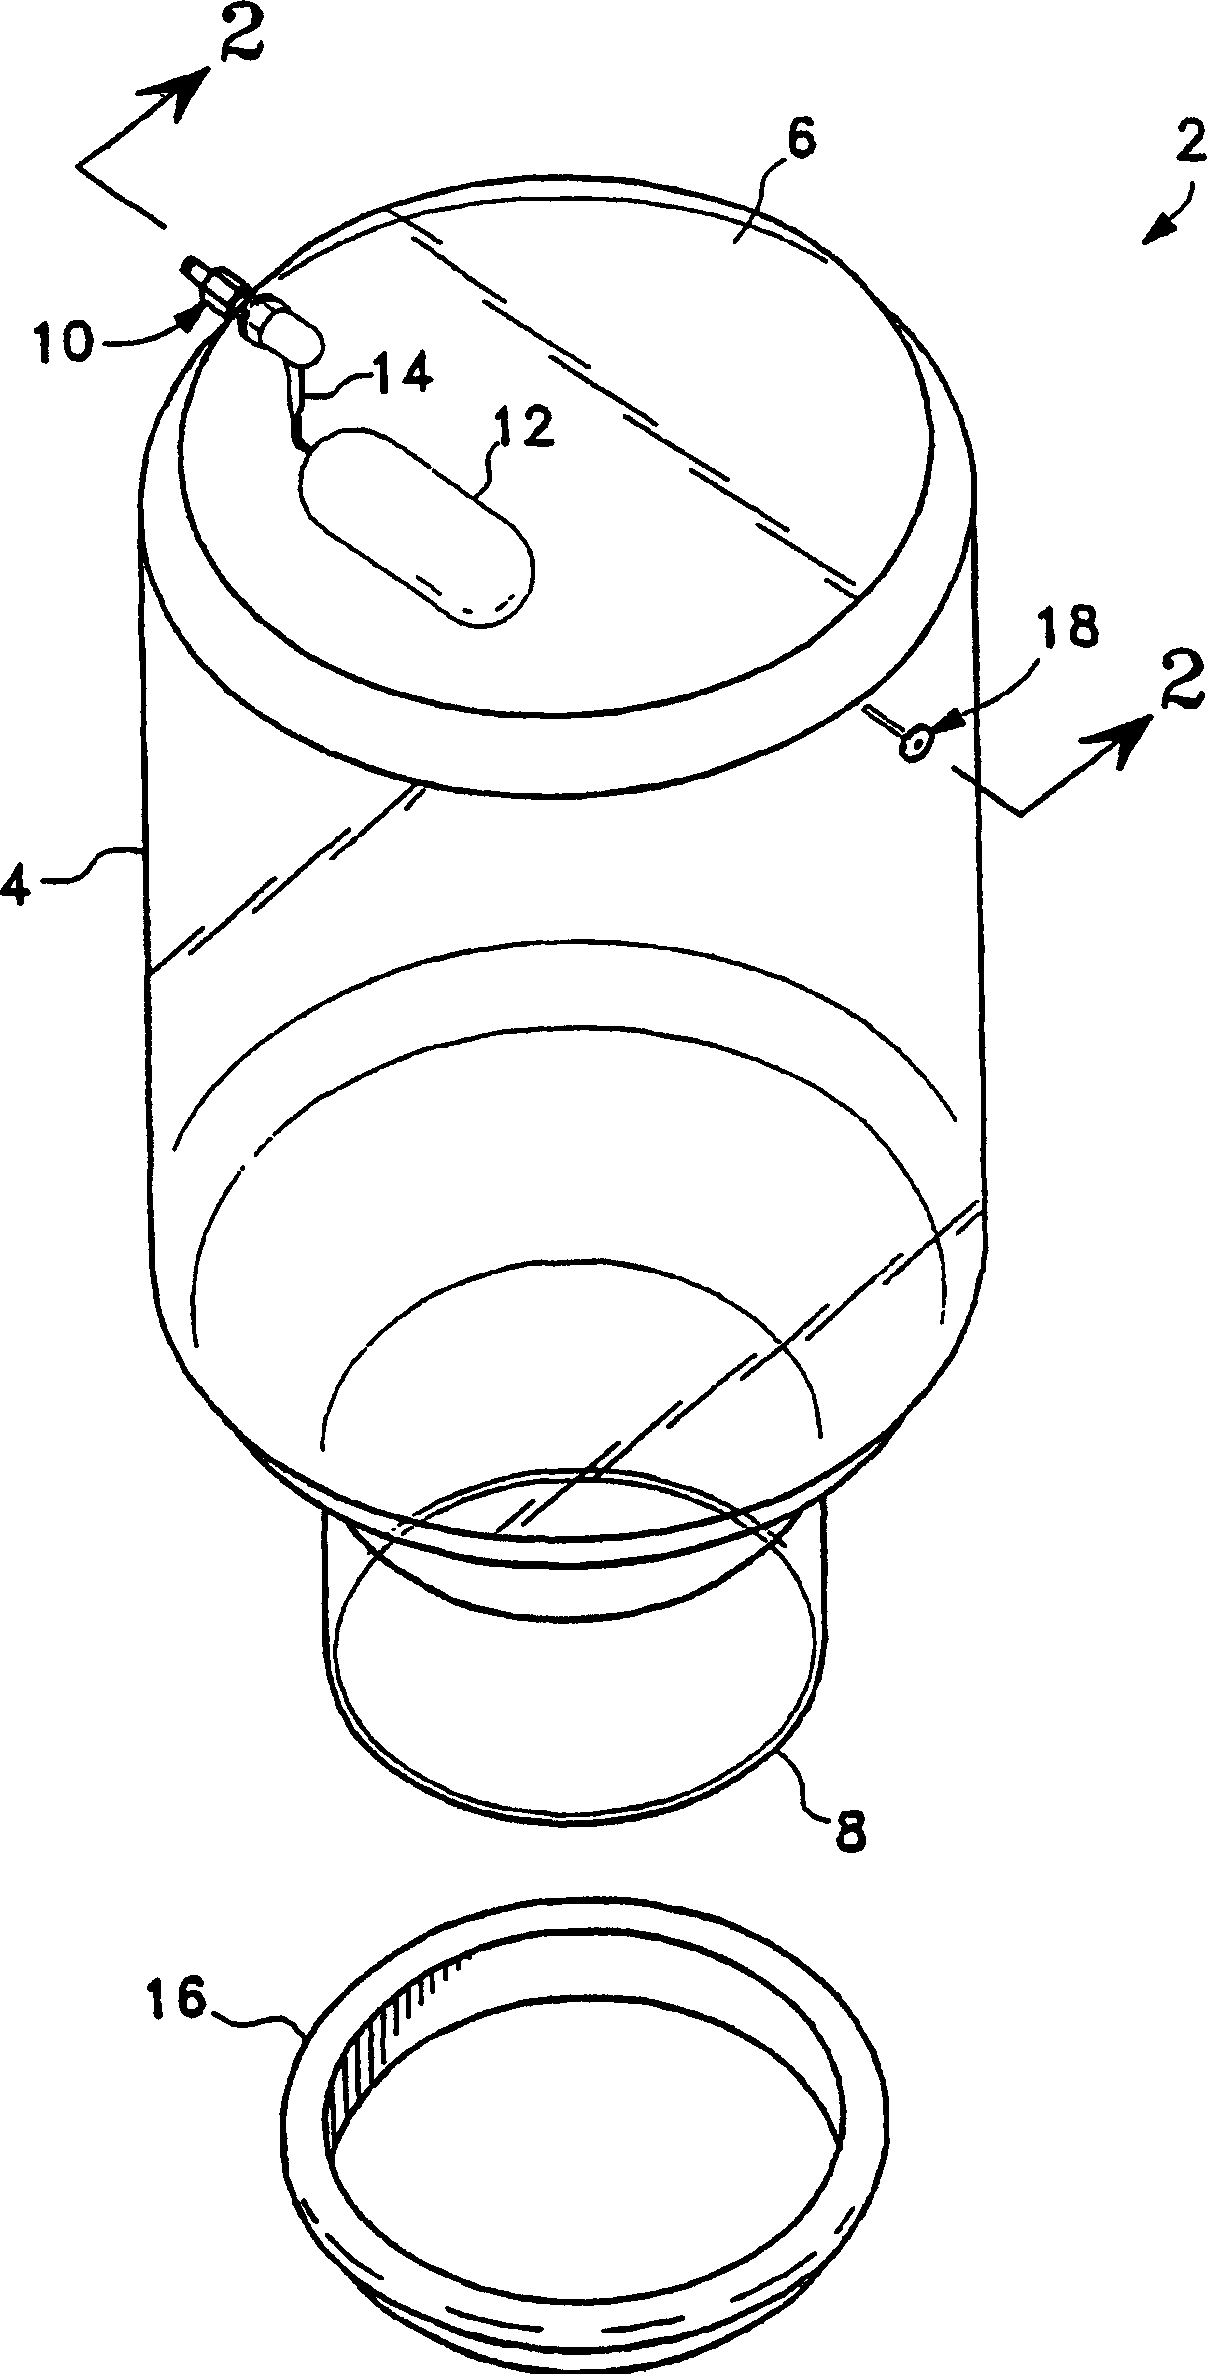 Continuous-flow drinking fluid dispenser